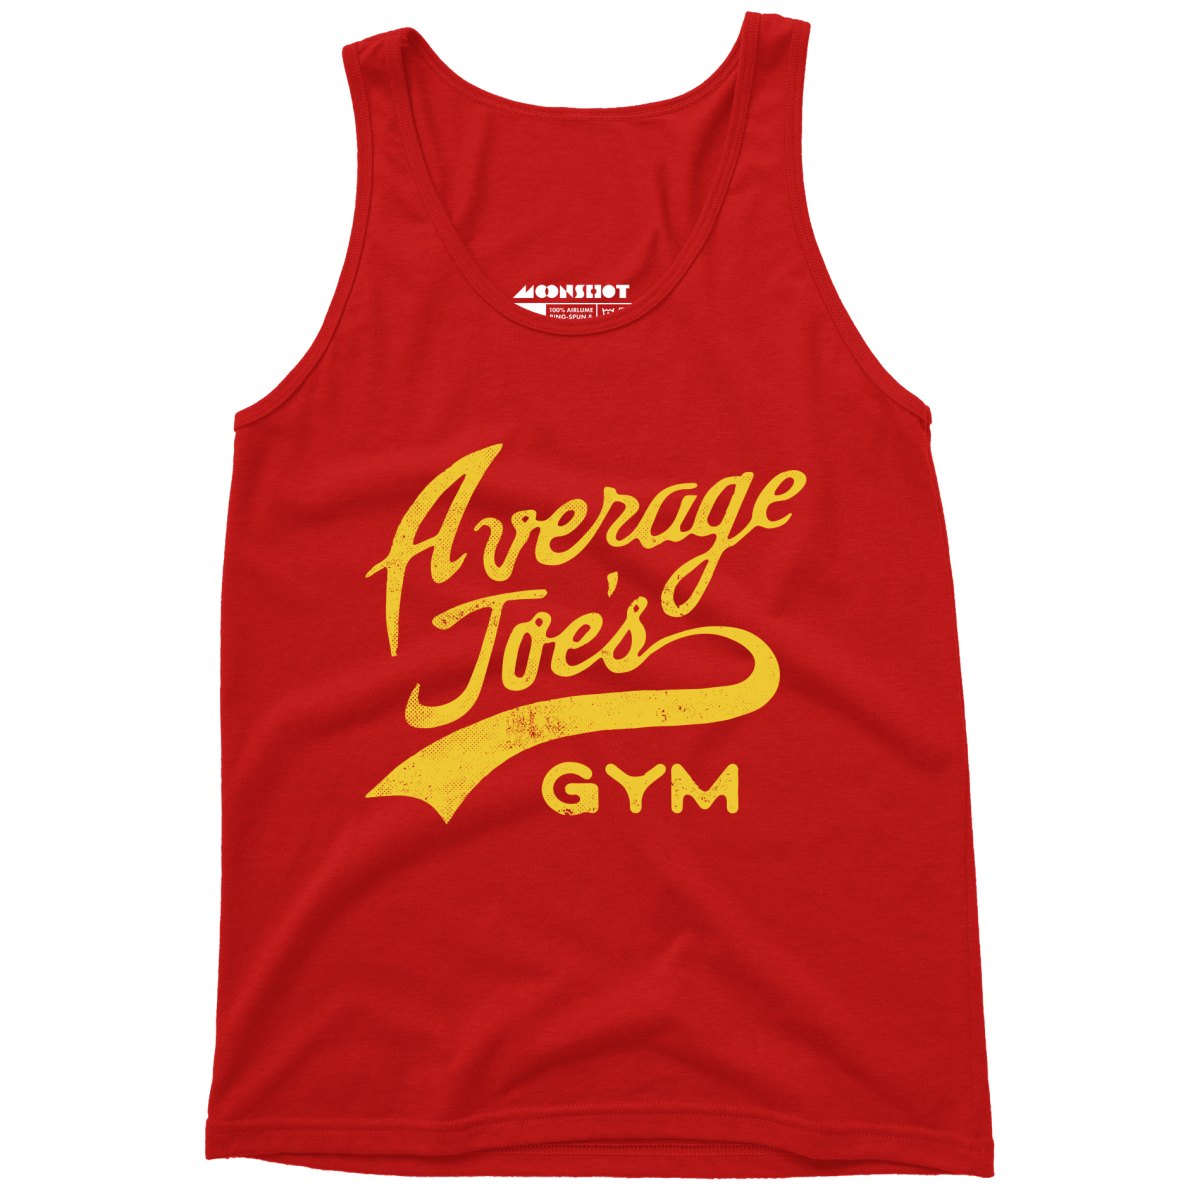 Average Joe's Gym - Unisex Tank Top